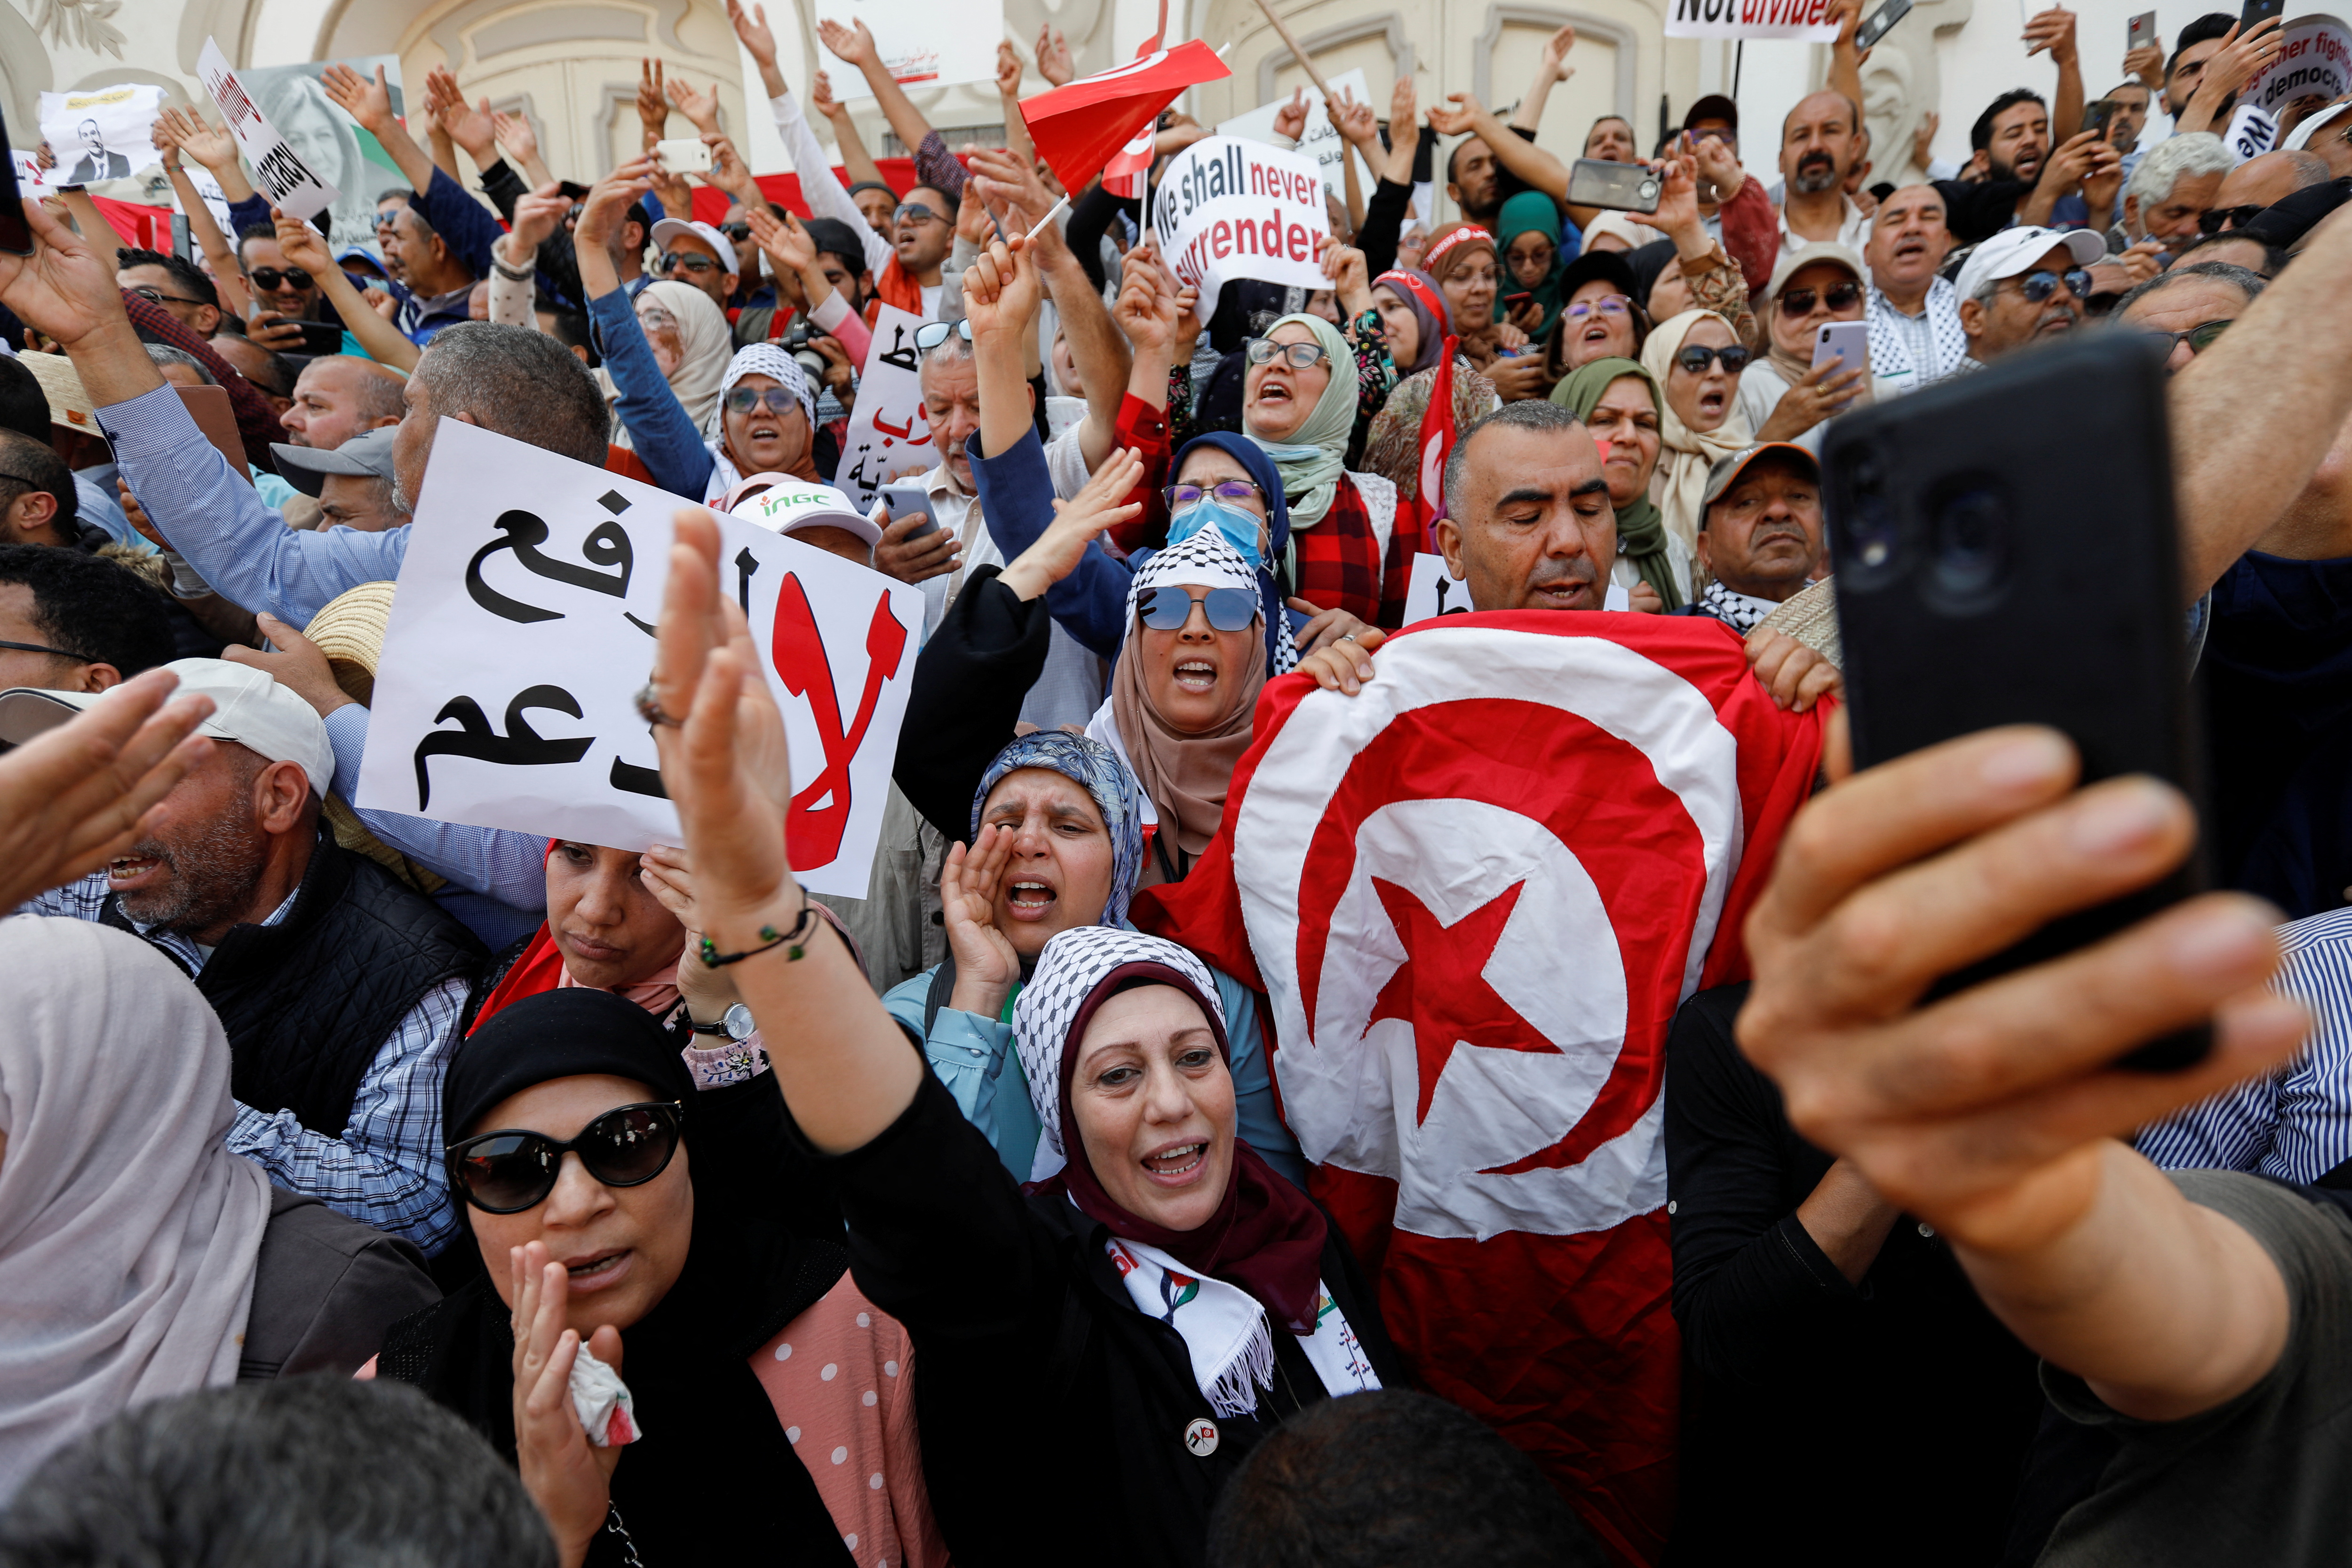 Tunisia opposition protest against President Kais Saied, in Tunis